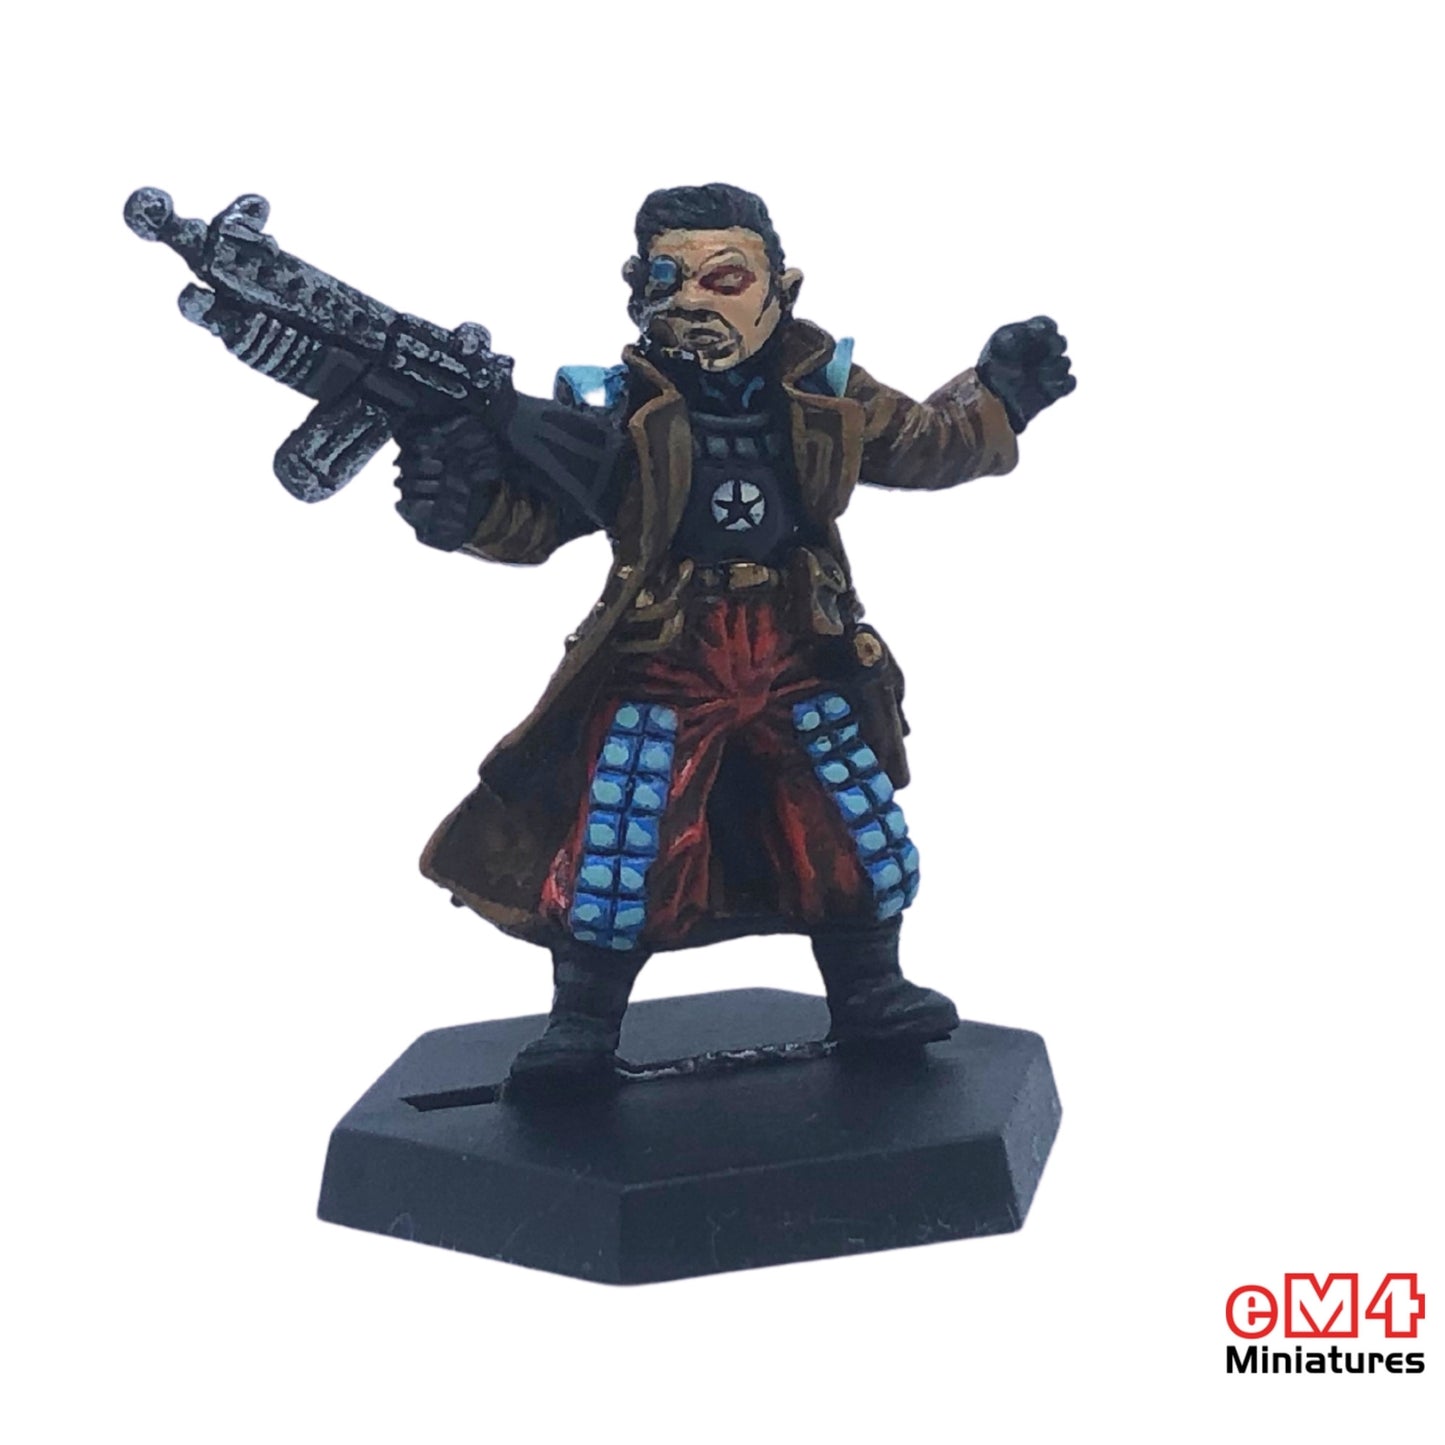 Mercenary Leader with Assault Rifle Miniature